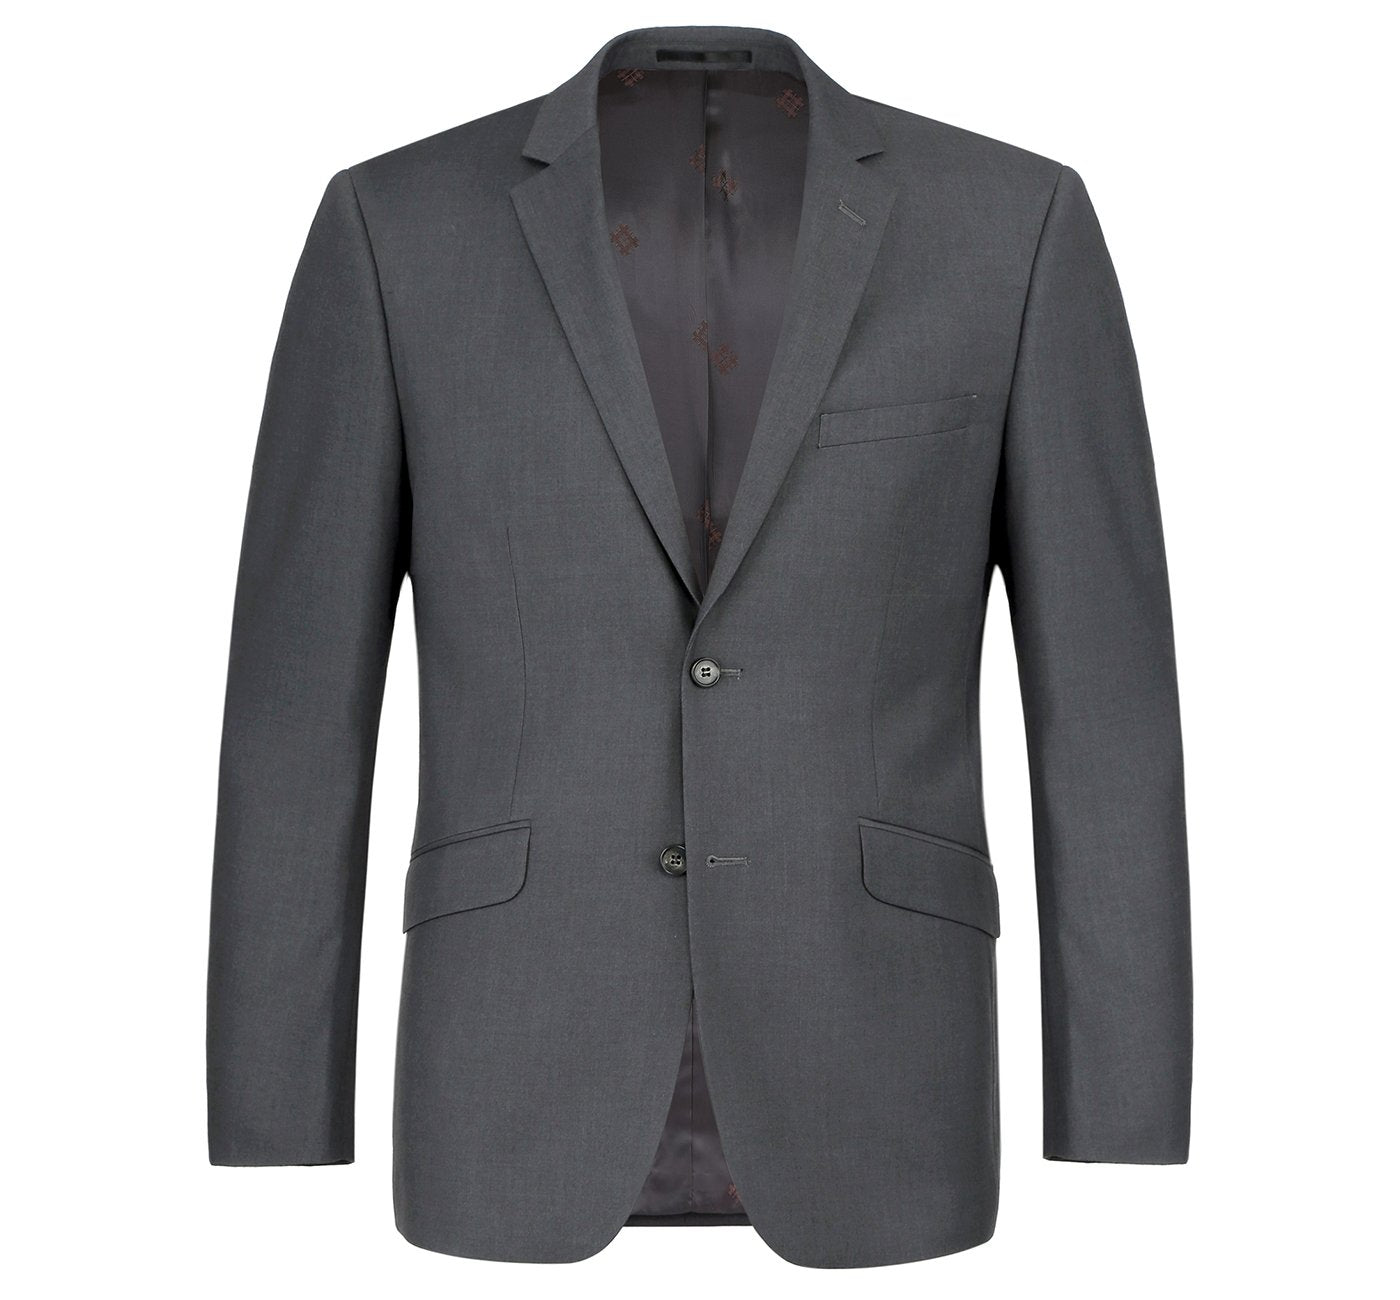 201-4 Men's Medium Grey 2-Piece Single Breasted Notch Lapel Suit